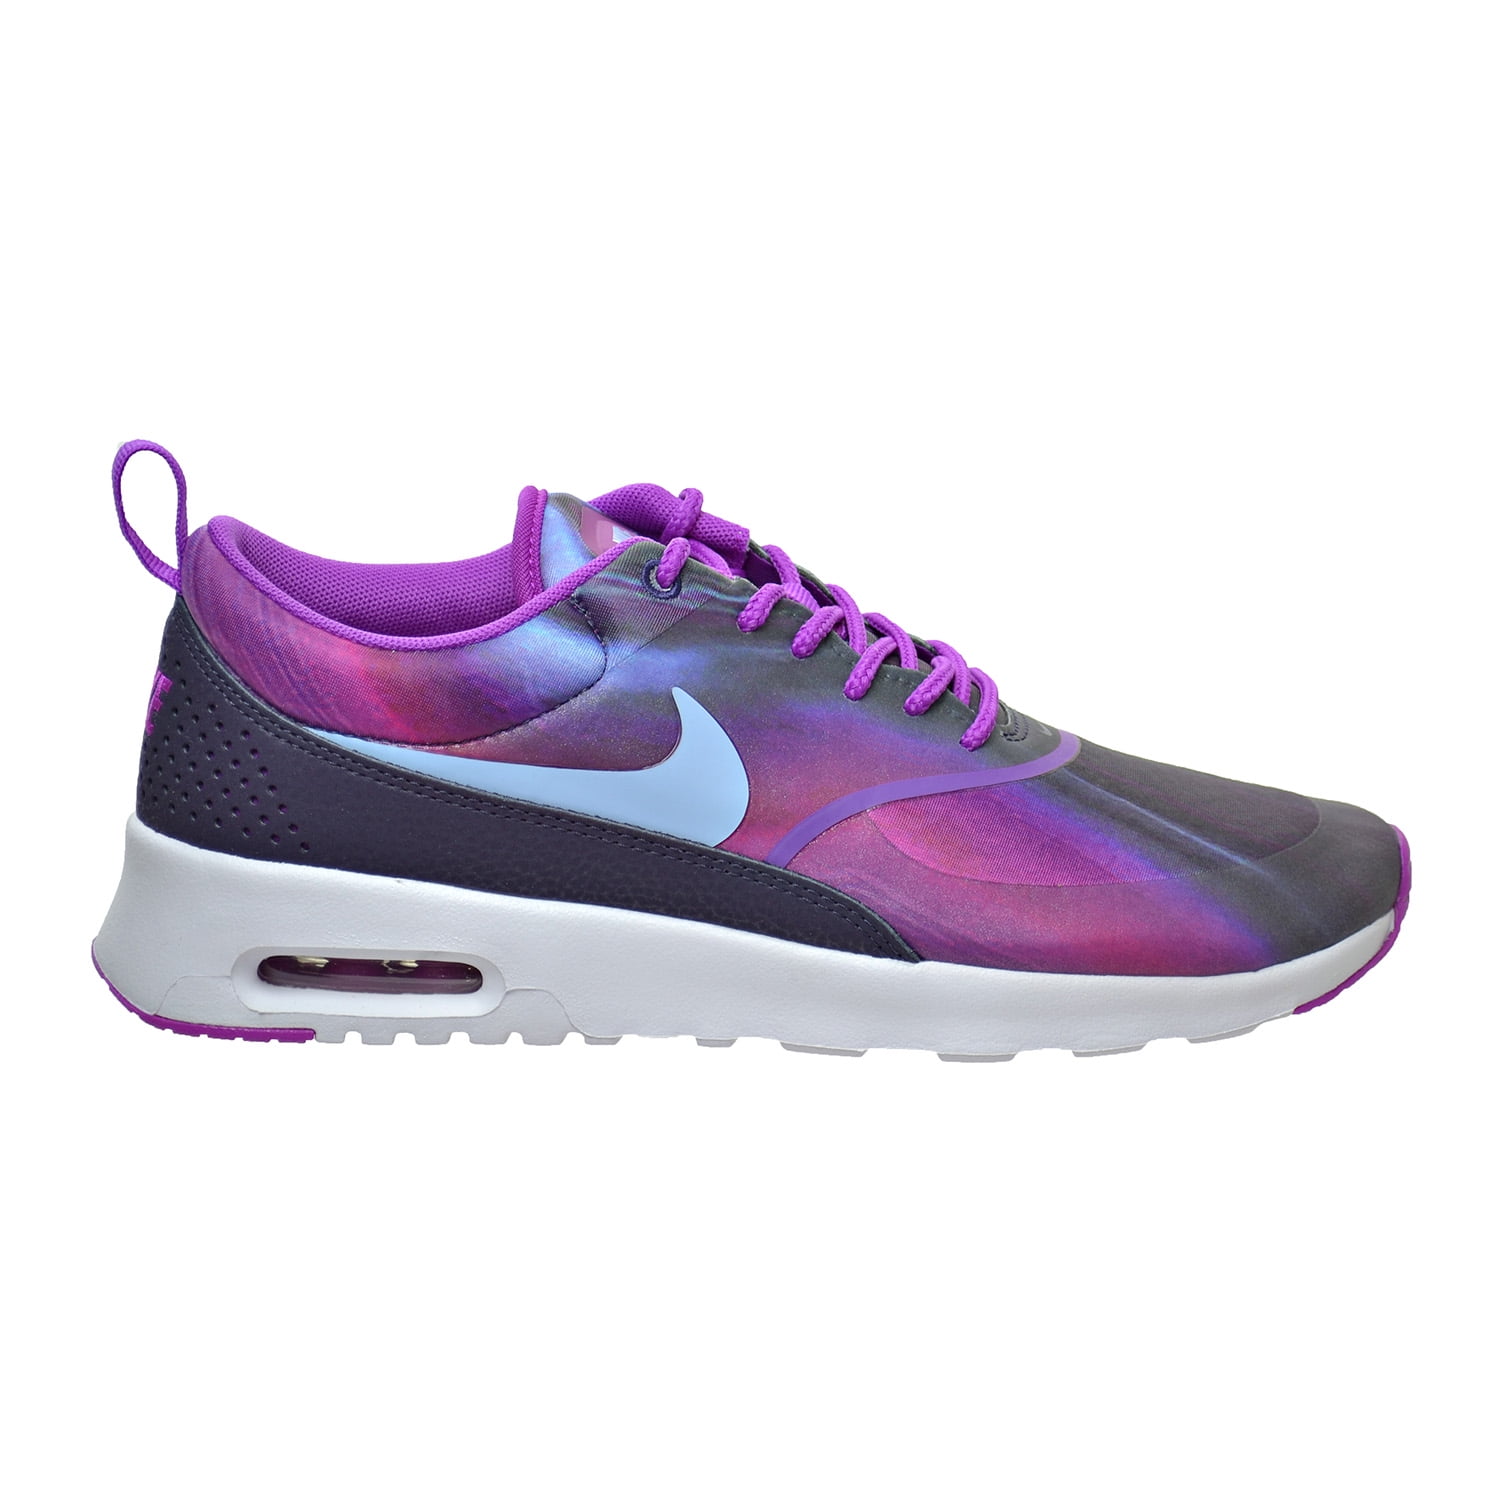 Actualizar Jardines boxeo Nike Air Max Thea Print Women's Shoes Hyper Violet/Blue Cap 599408-503 (8.5  B(M) US) - Walmart.com